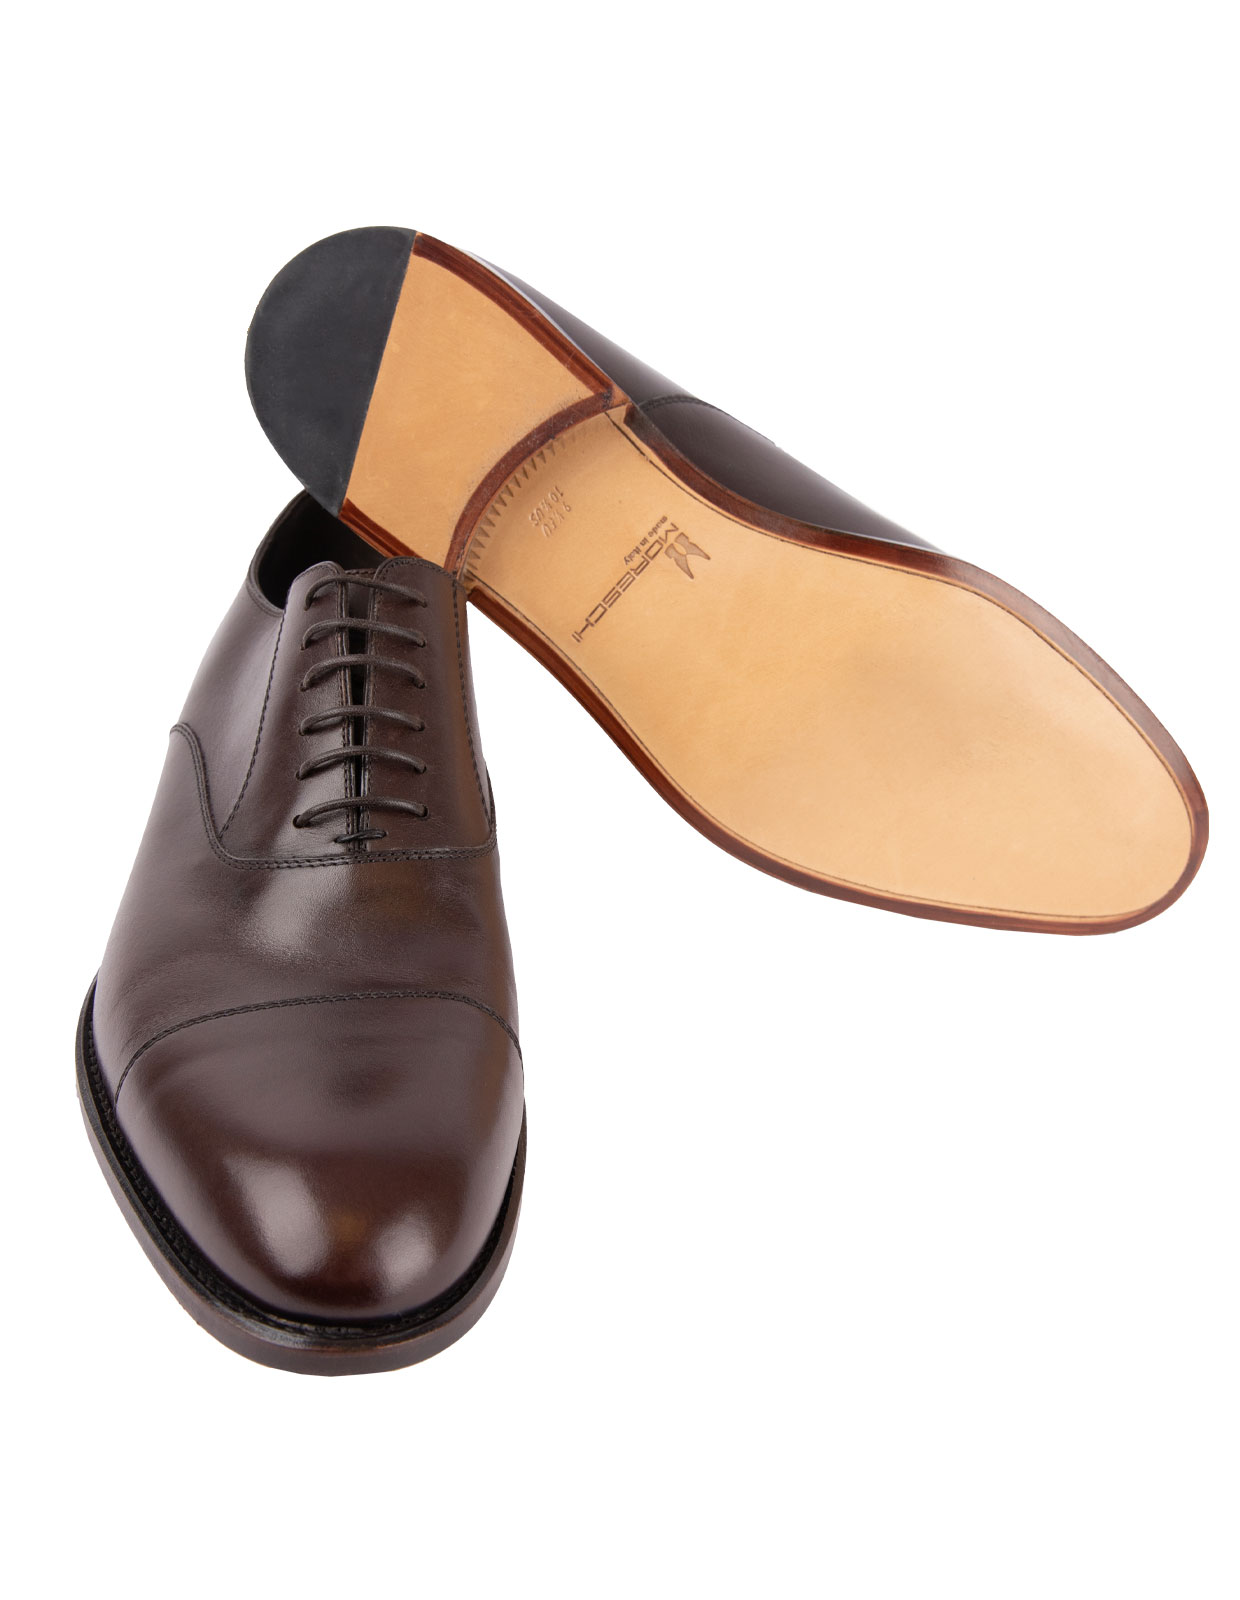 New York Oxford Shoes Calfskin Brown Stl 9